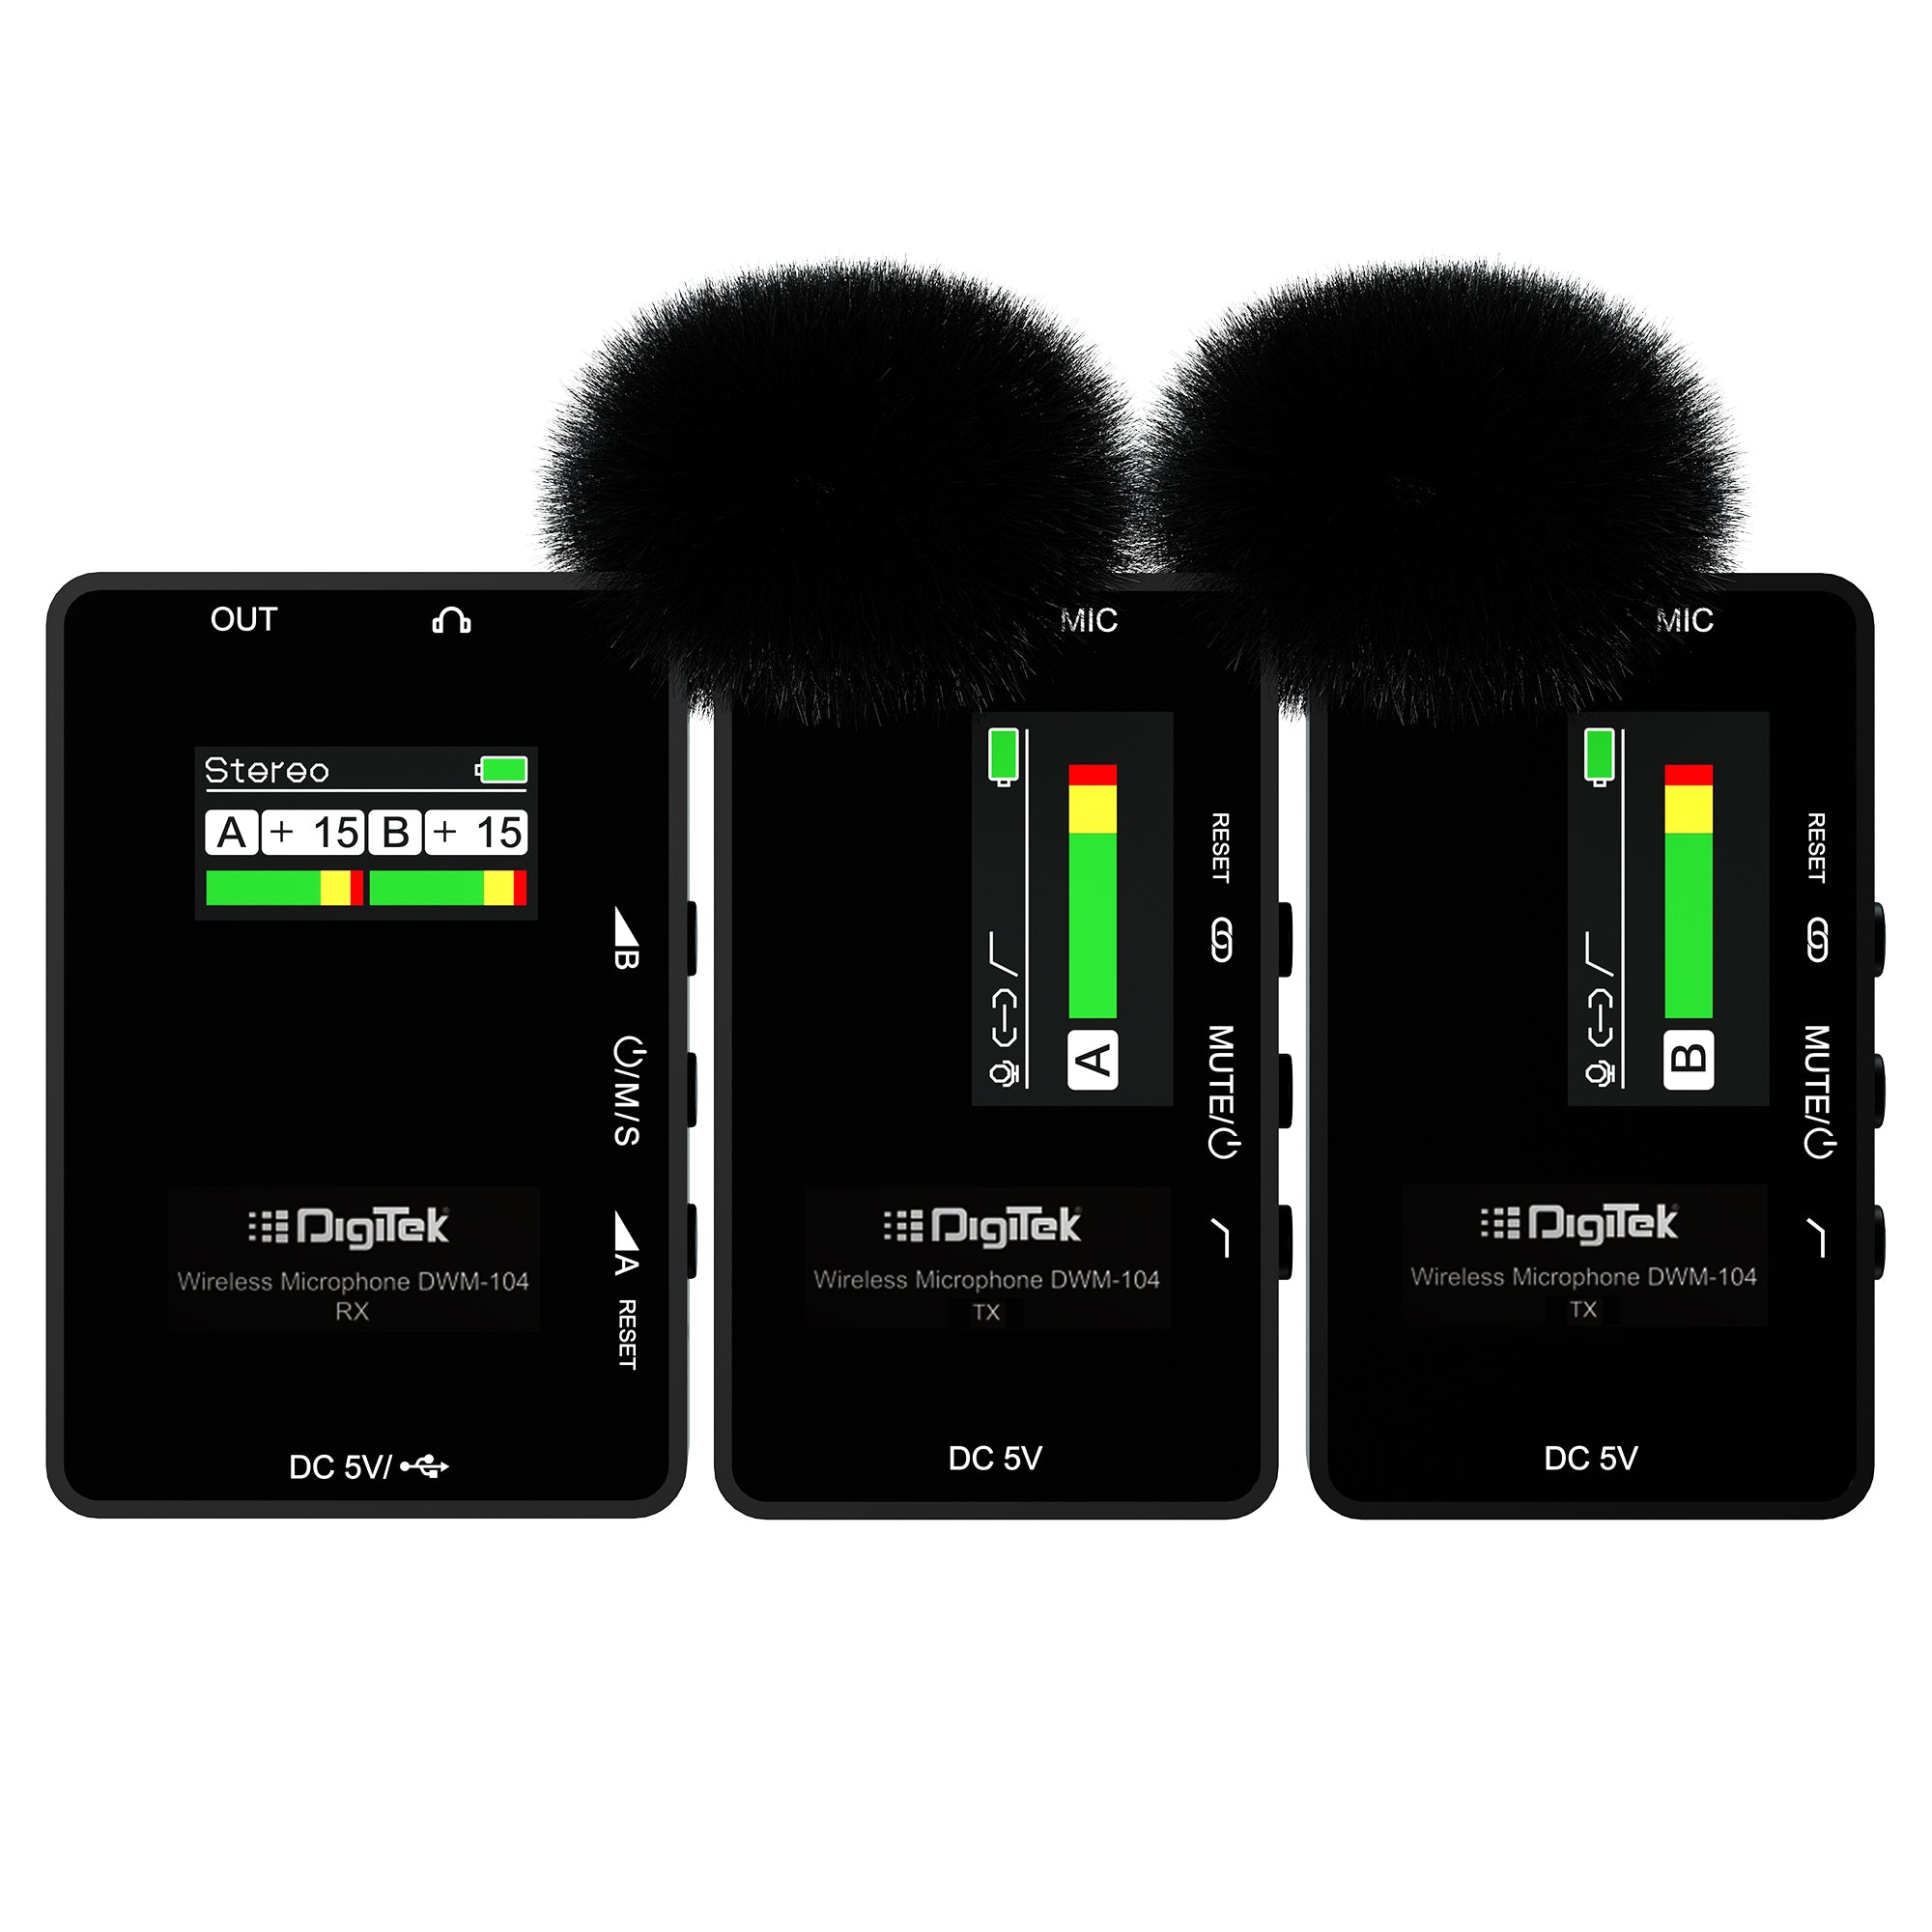 Digitek (DWM-104) Wireless Microphone System  is a Wireless Microphone System with 2.4G.